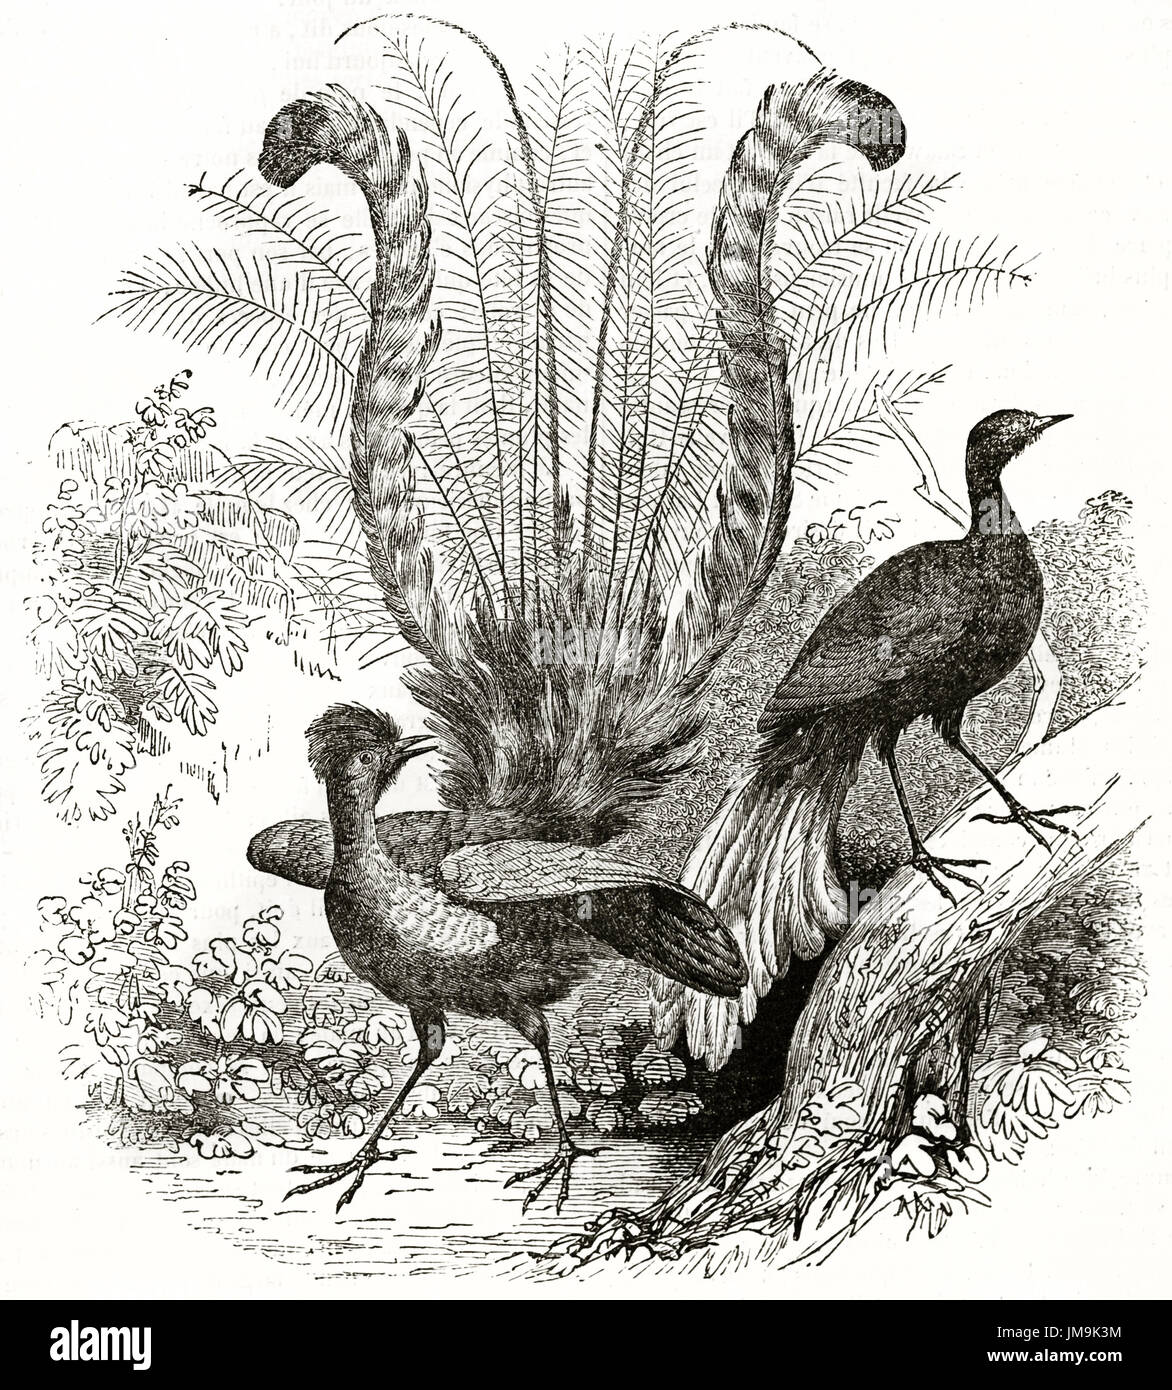 Old illustration of Superb Lyrebird (Menura novaehollandiae). By unidentified author, published on Magasin Pittoresque, Paris, 1837 Stock Photo